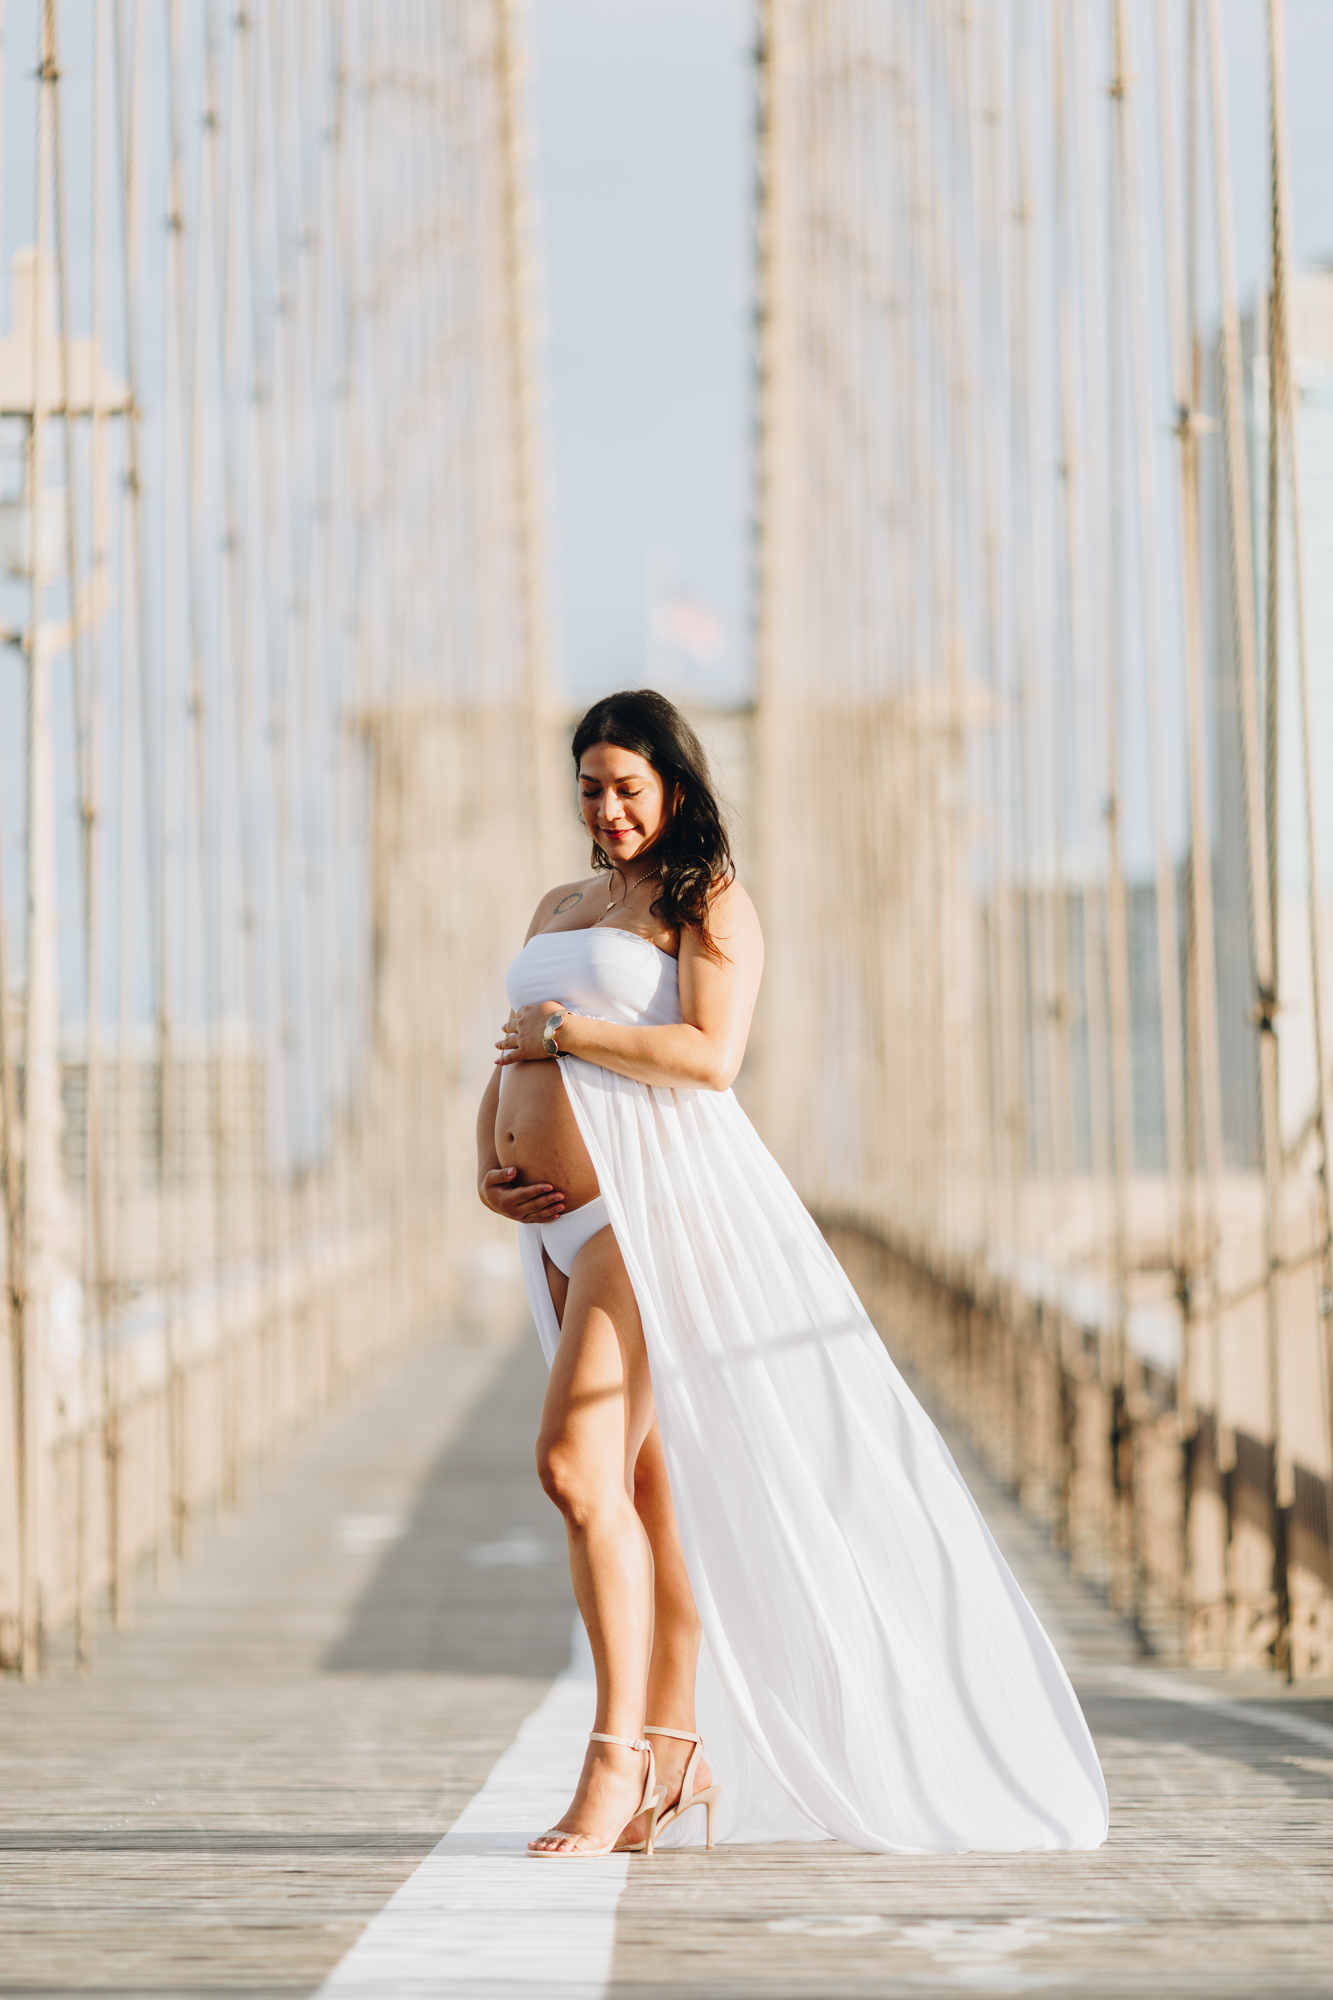 Sentimental Brooklyn Bridge Maternity Photos